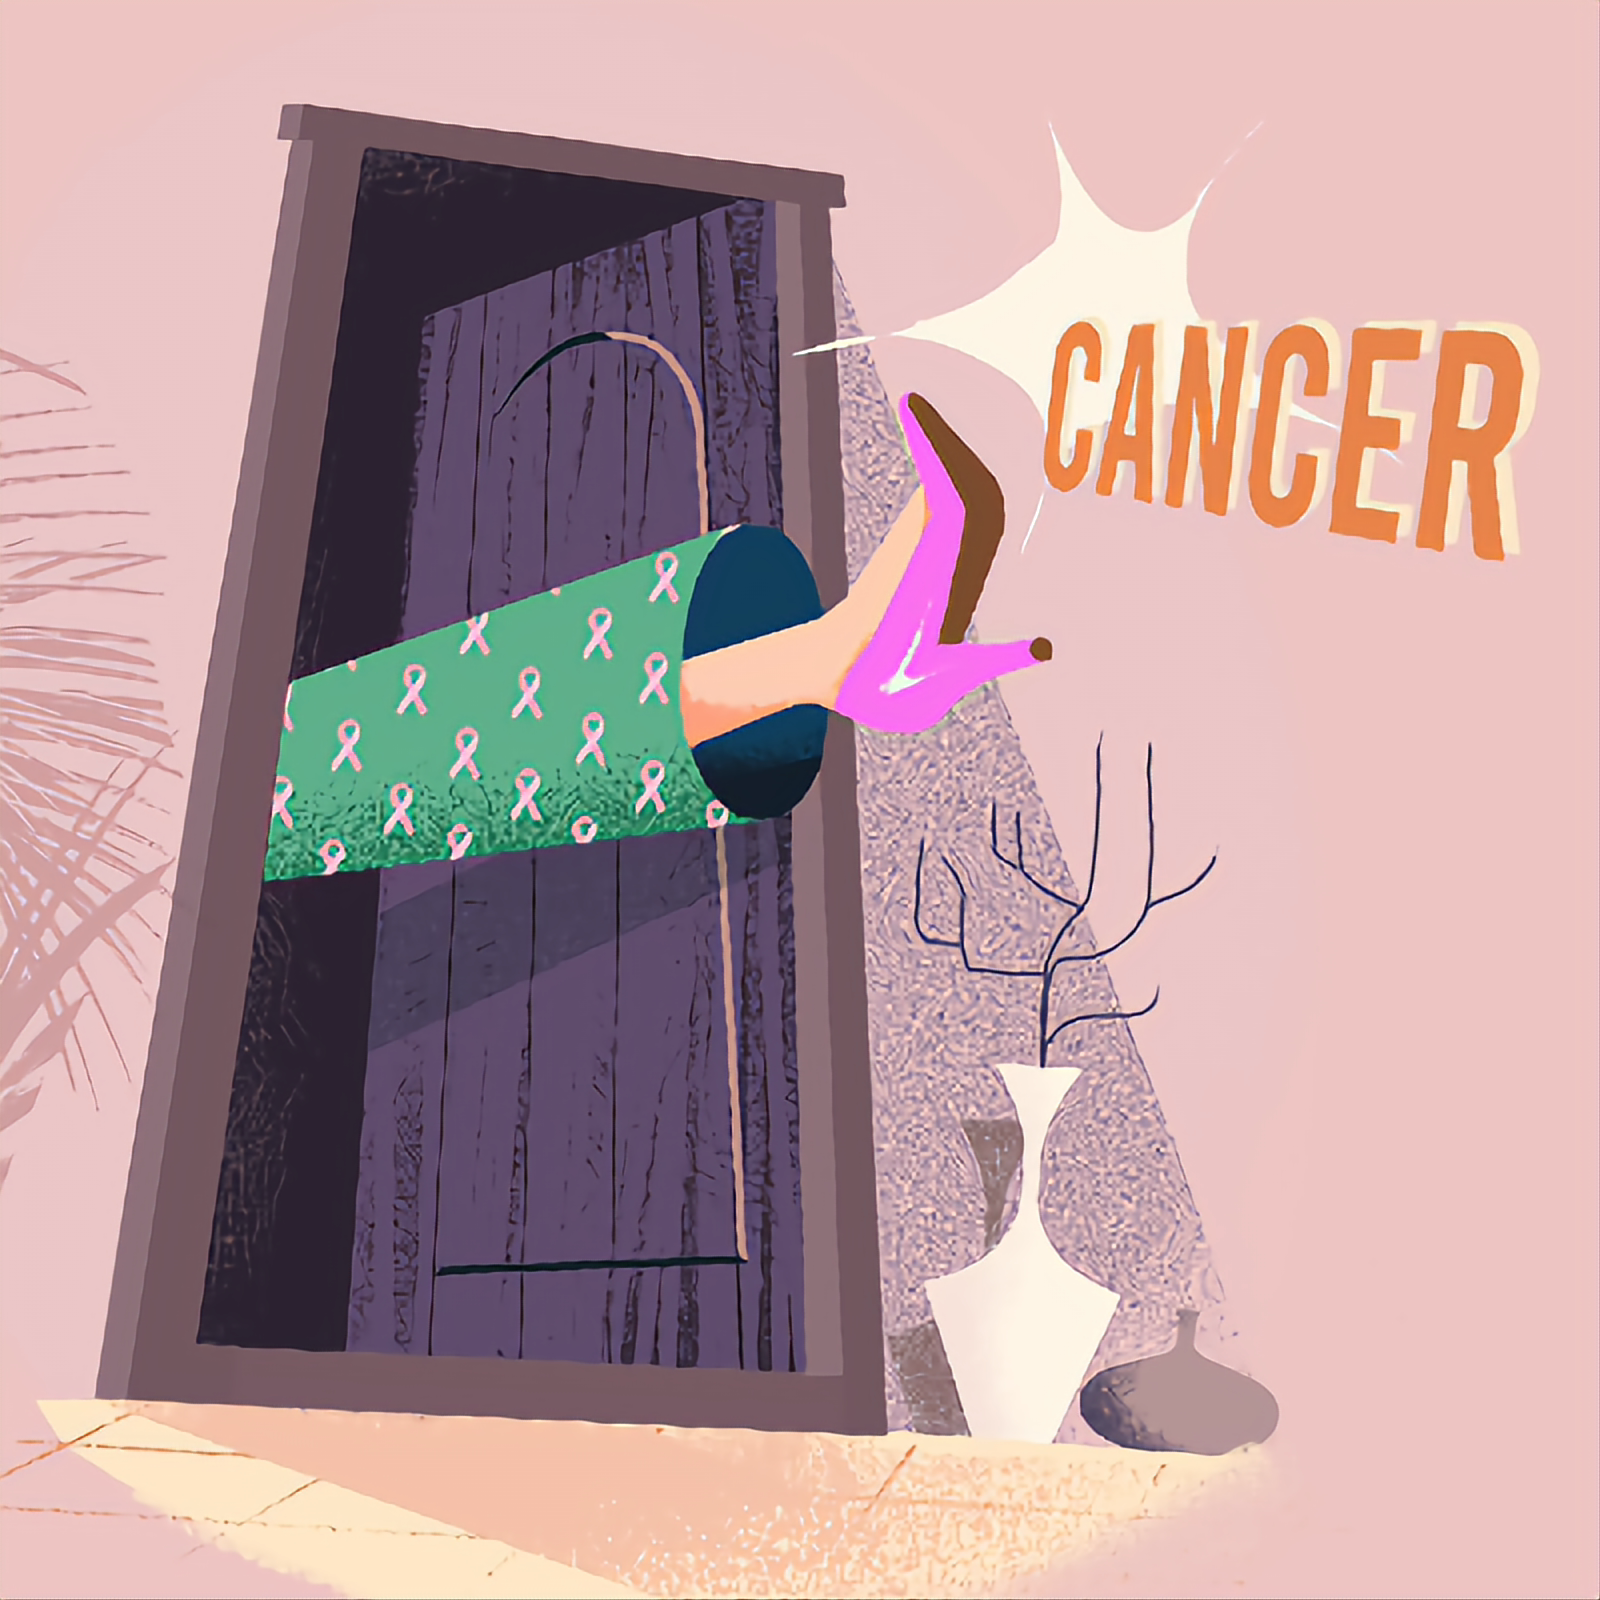 Kicking  cancer out  illustration